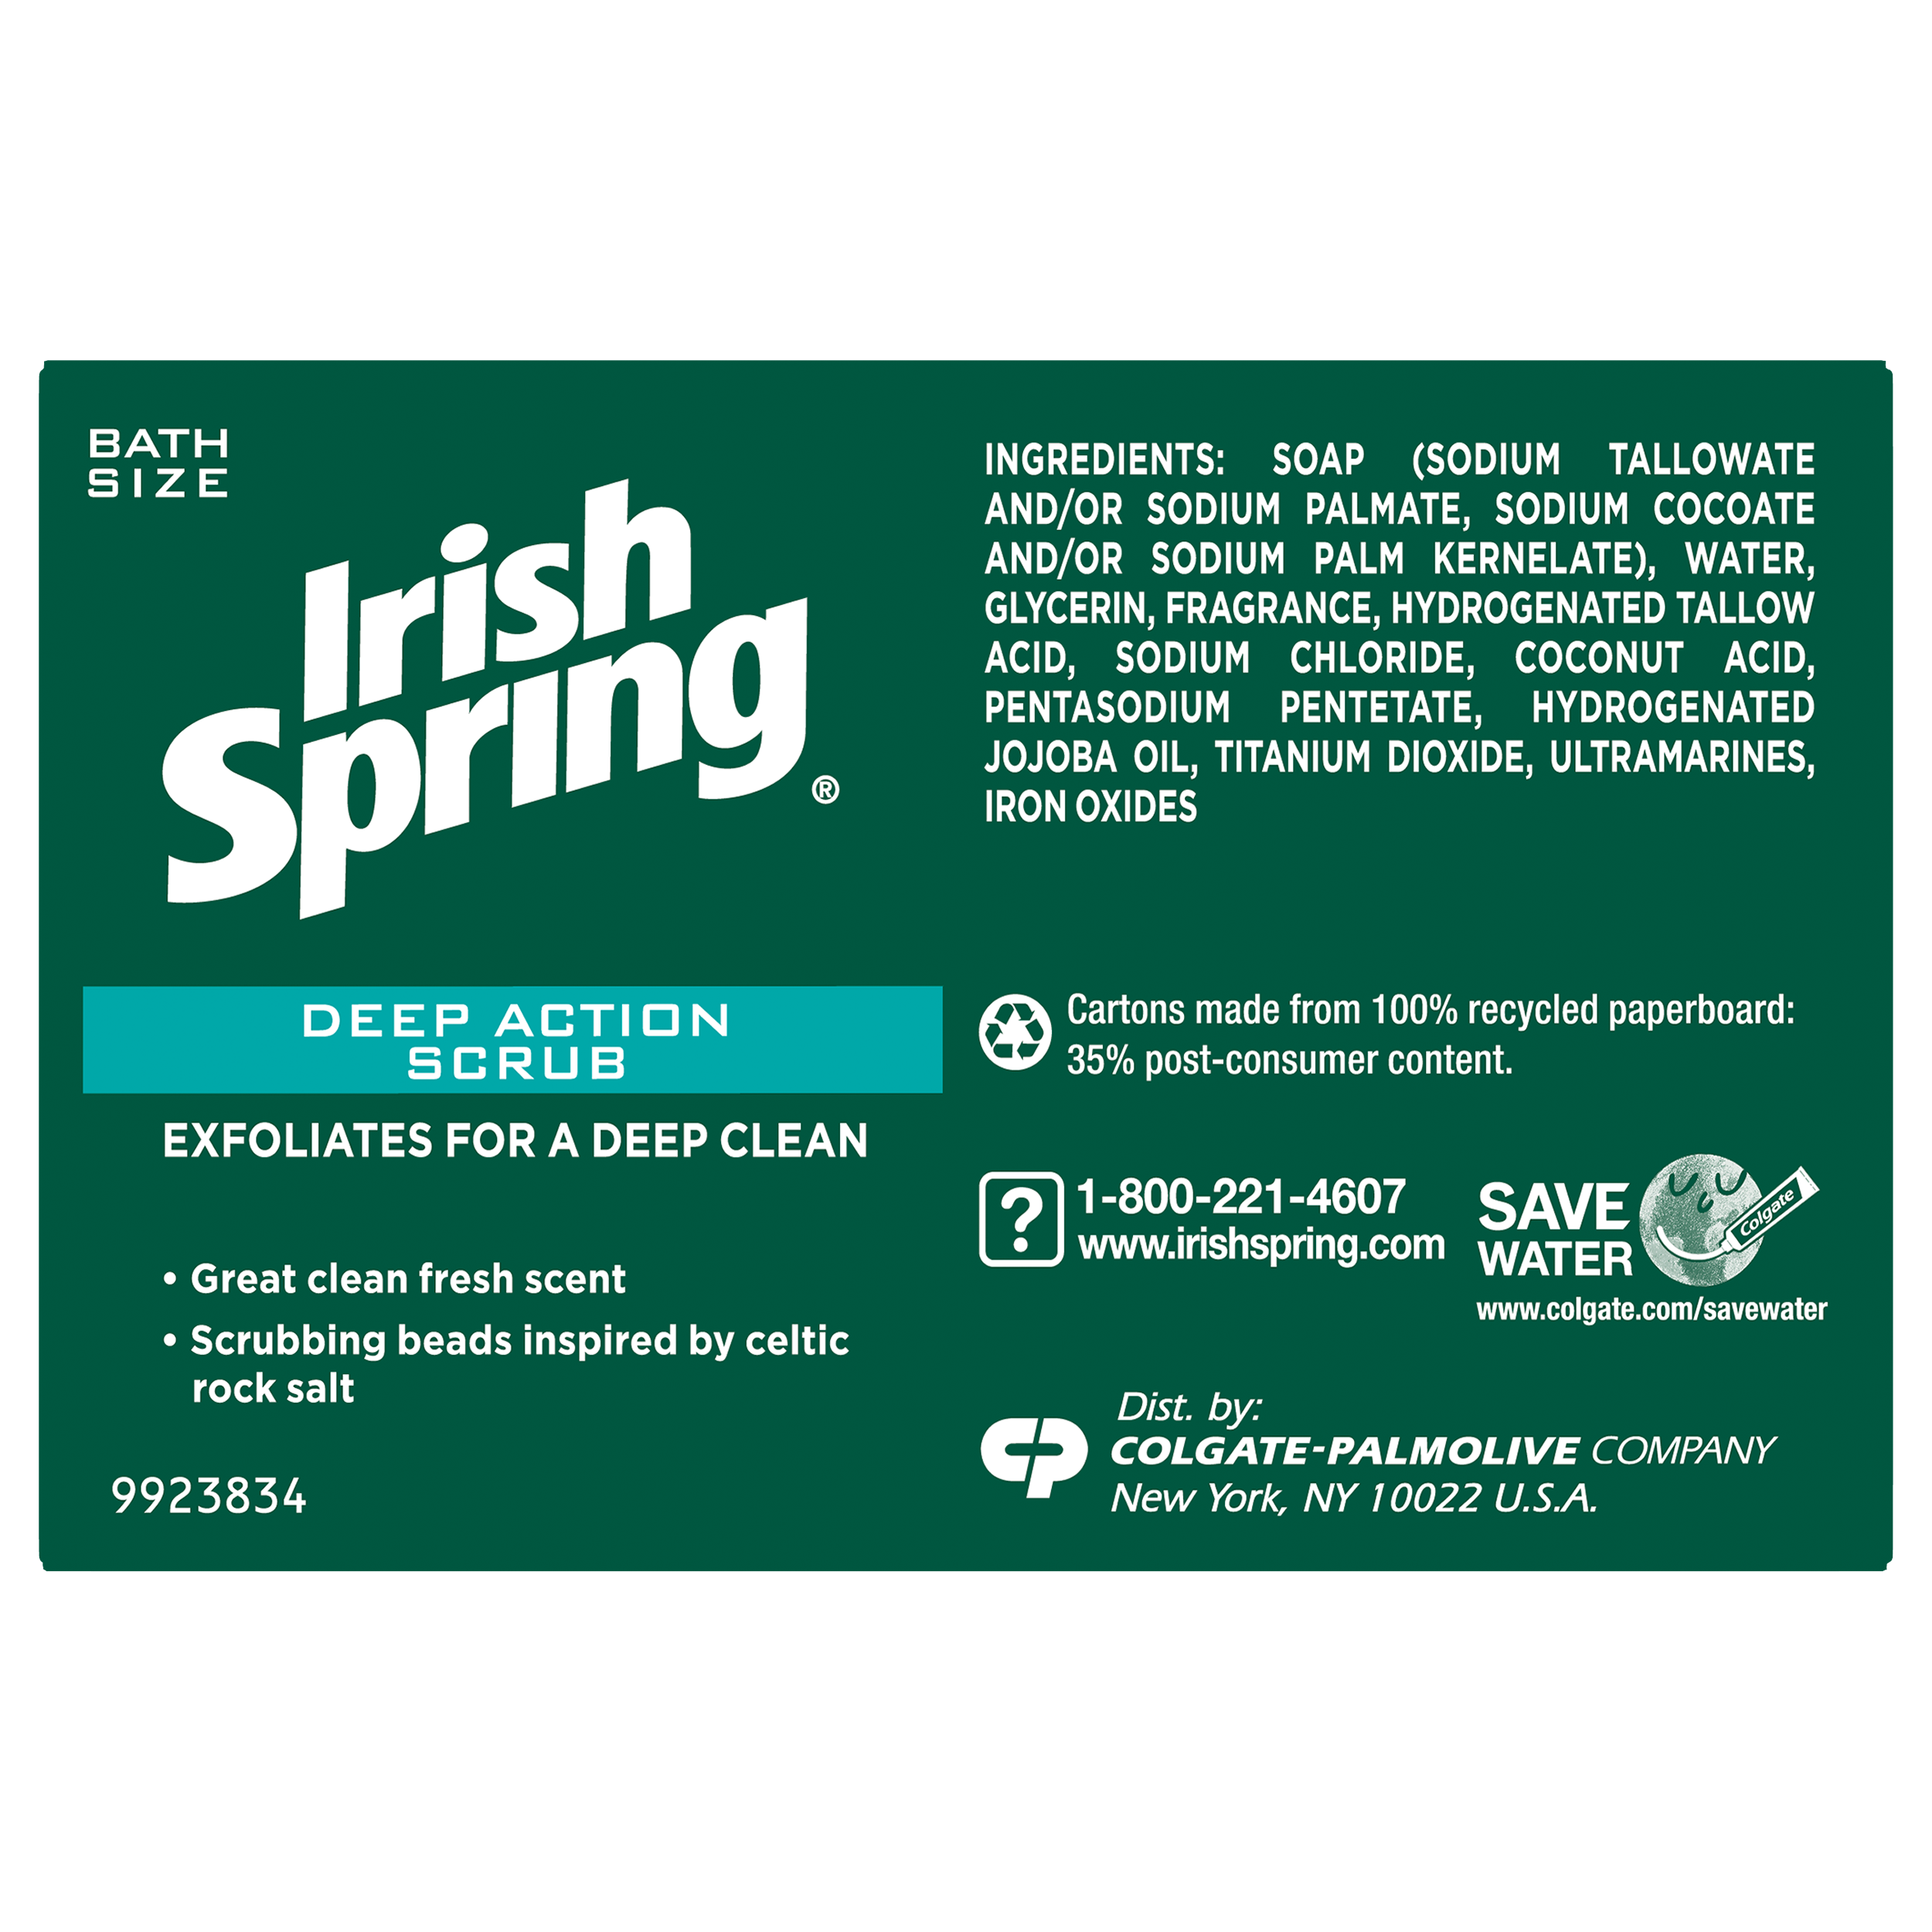 Deep Action Scrub Deodorant Soap by Irish Spring, 3 Ct - image 3 of 4